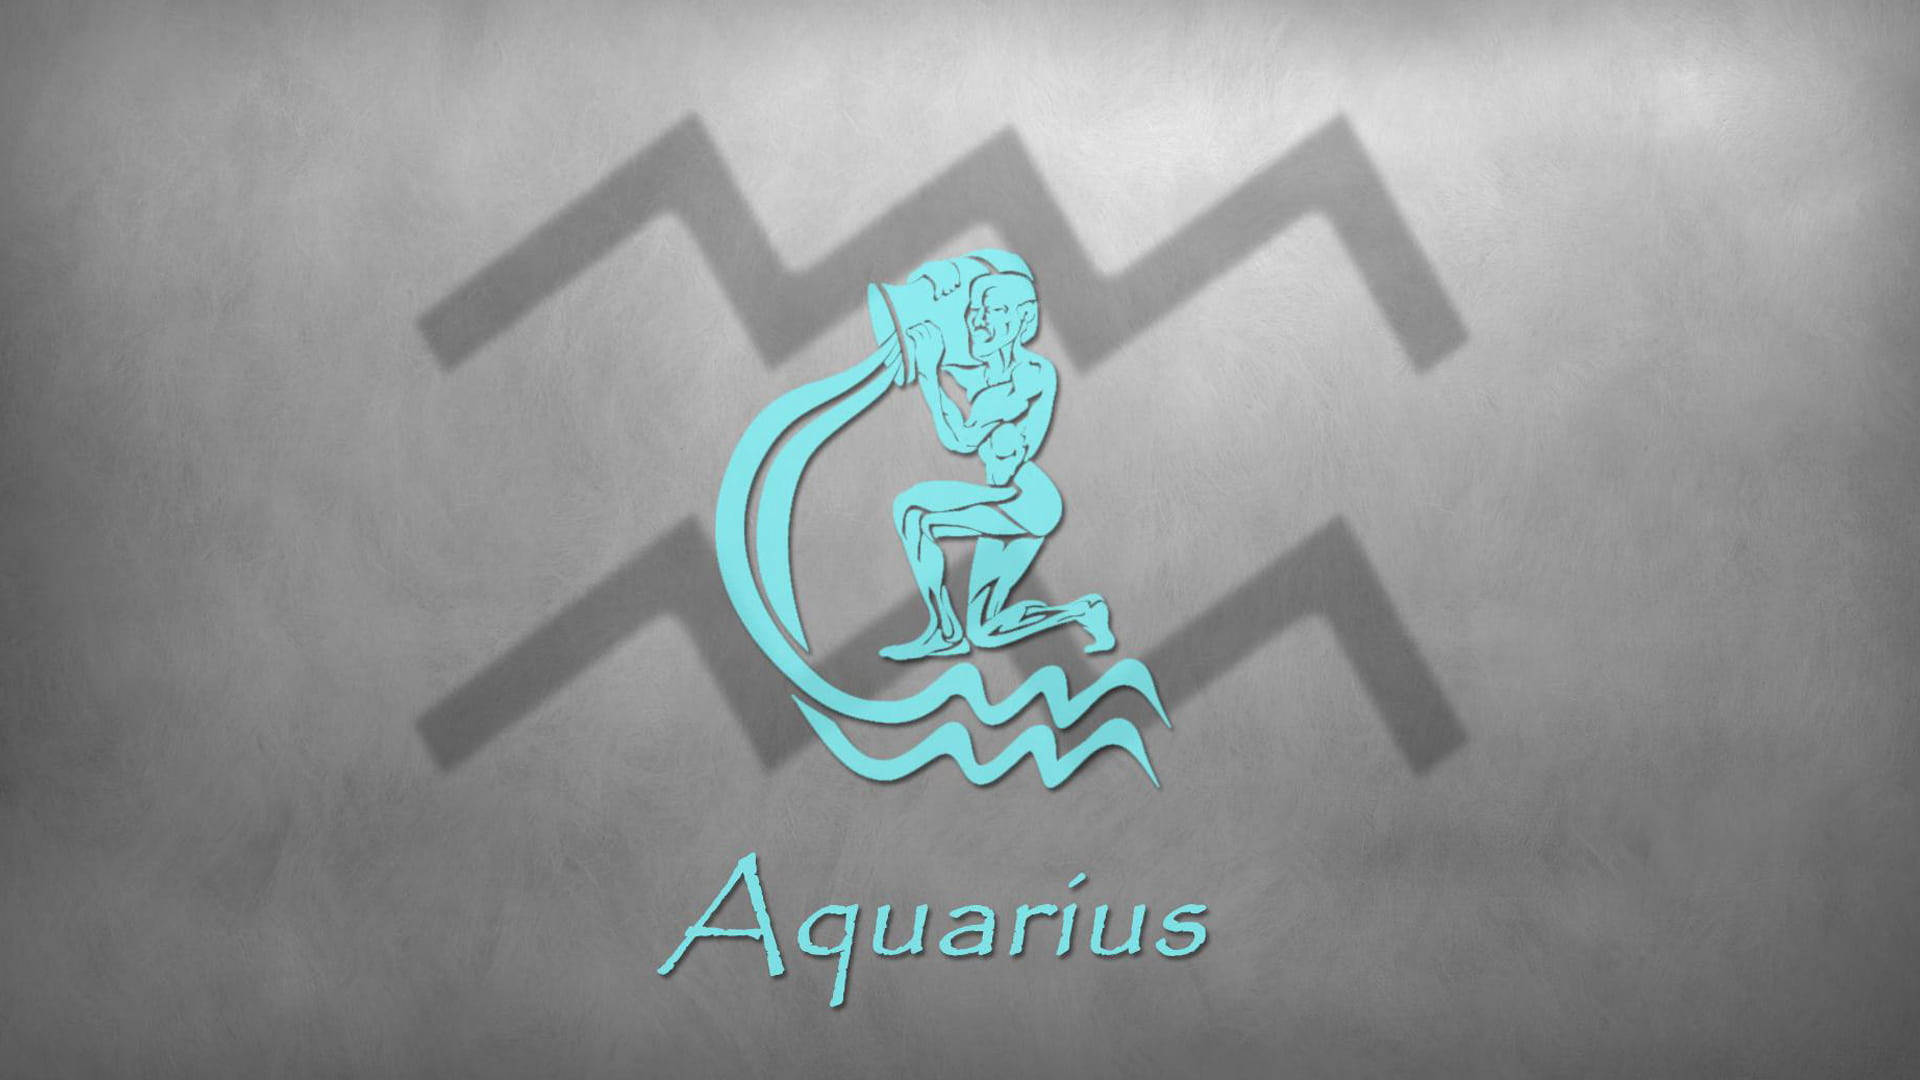 Aquarius 1920 X 1080 Wallpaper